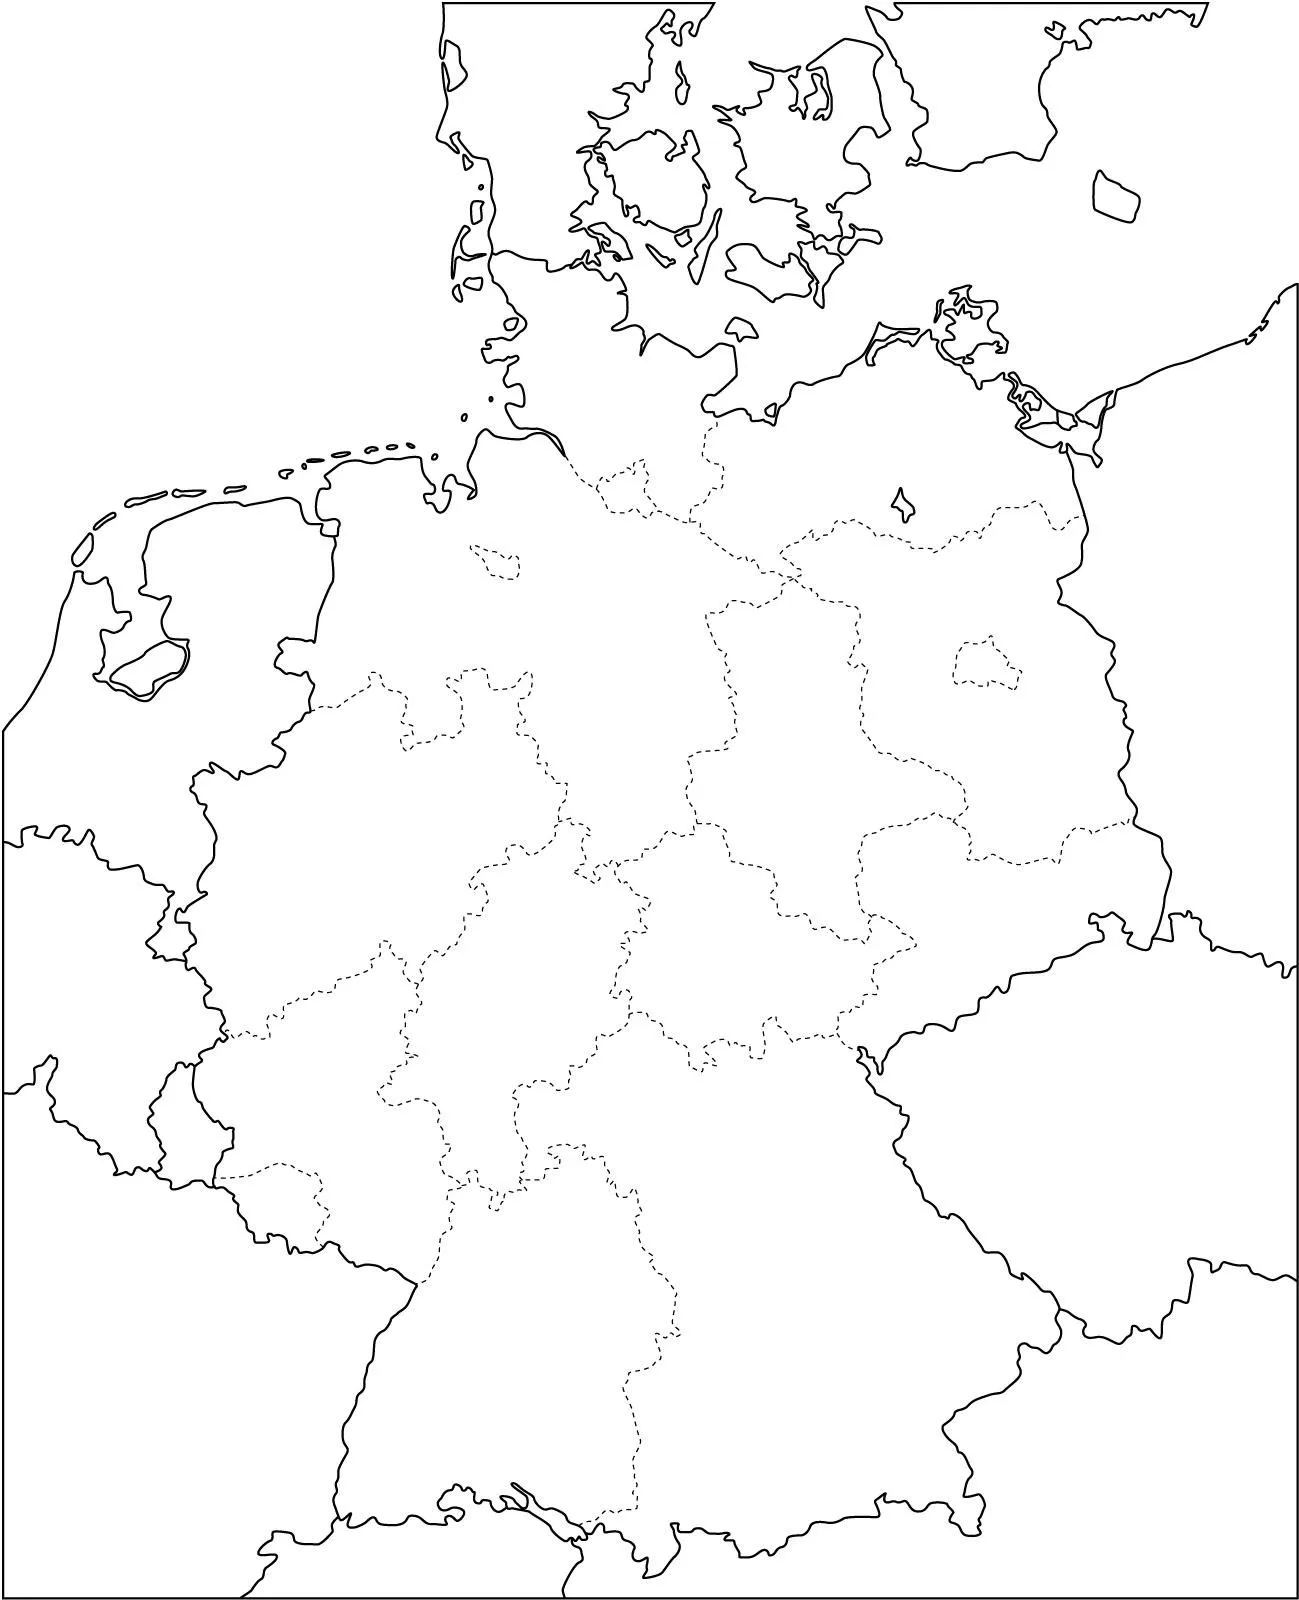 Mapa político mudo de Alemania para imprimir Mapa de estados ...